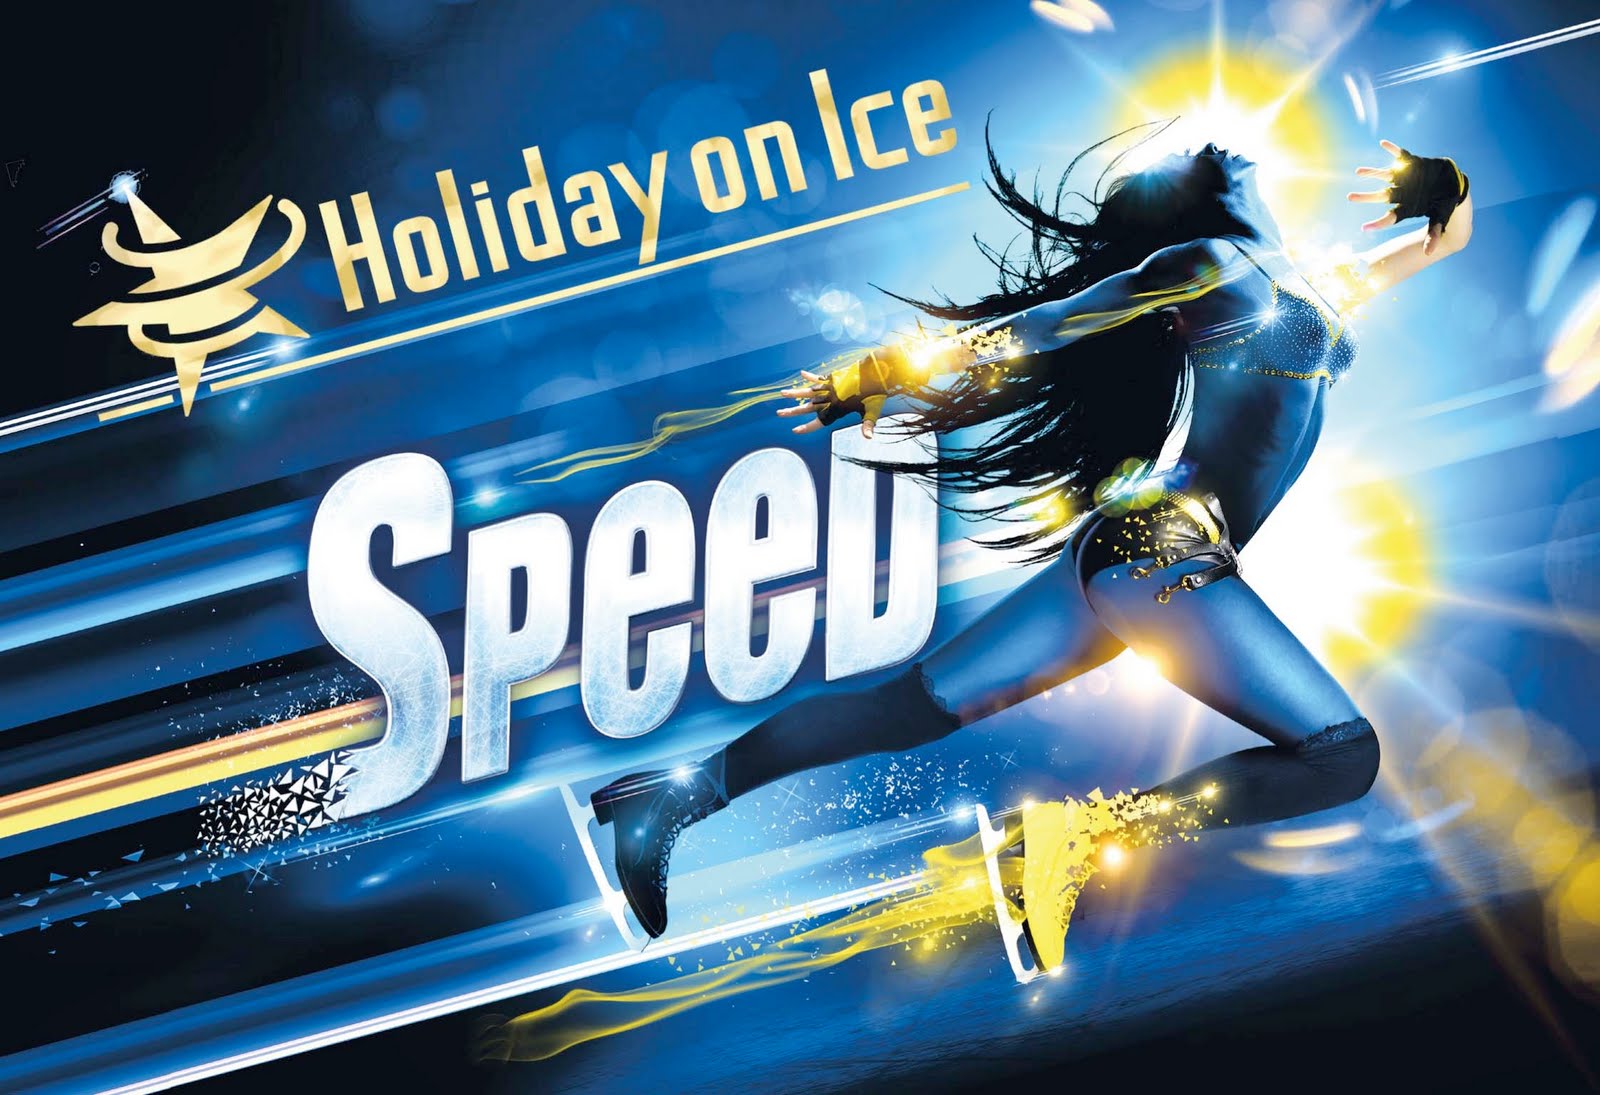 Айс скорость. Шоу "Holiday on Ice". Electro Speed. Show Speed танец. Show Speed танцует.